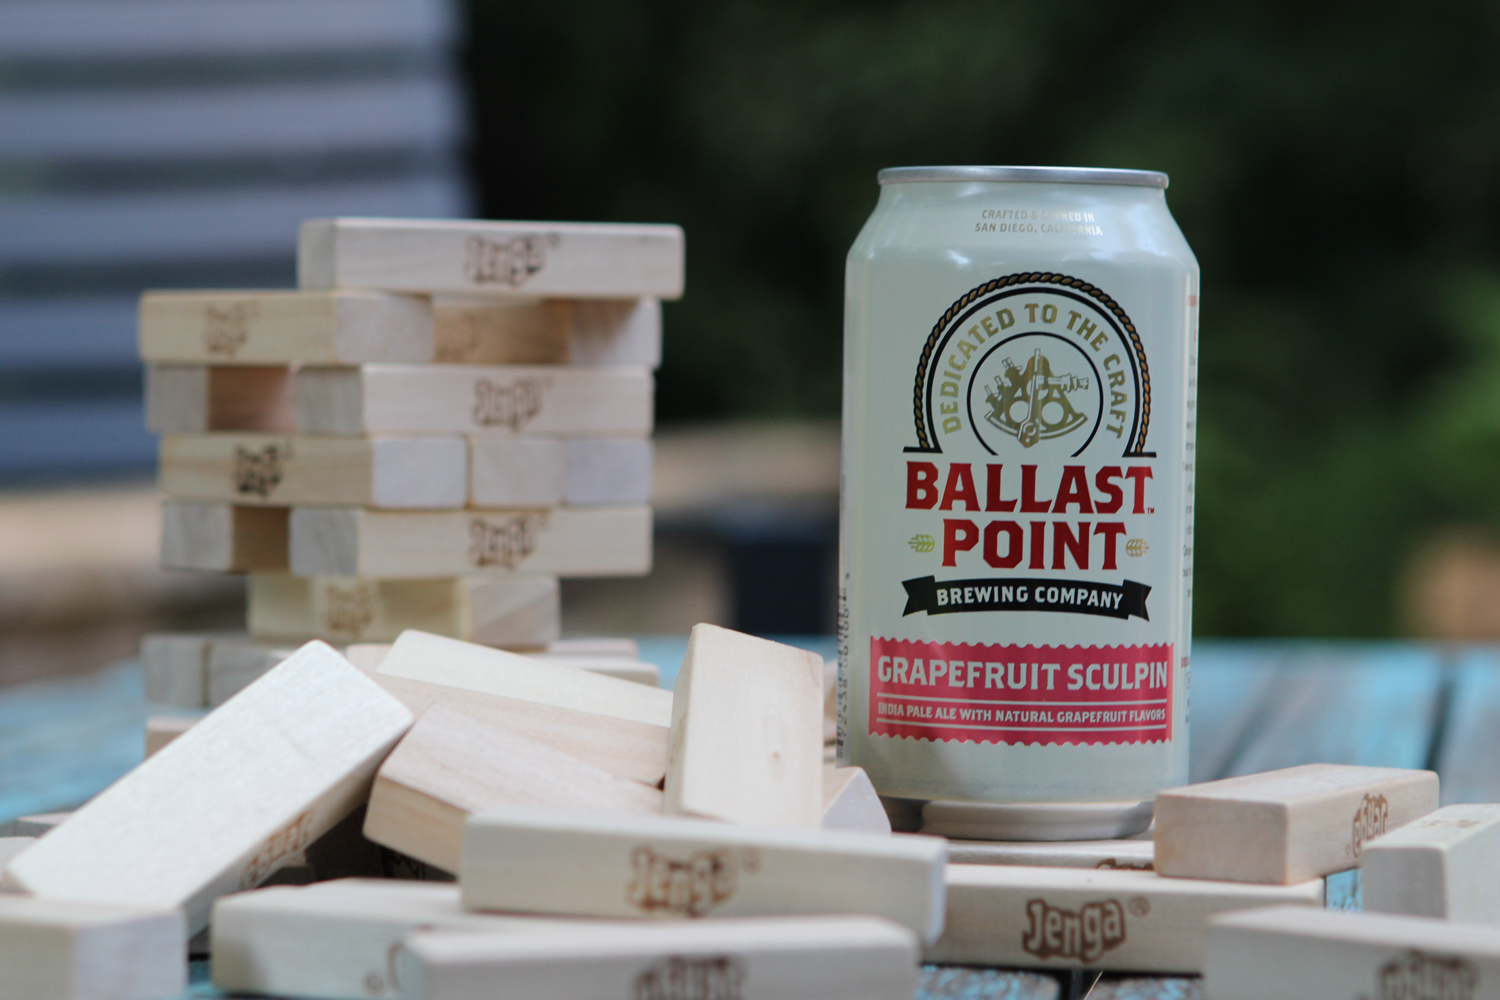 Ballast Point Grapefruit Sculpin is a favorite IPA summer beer.